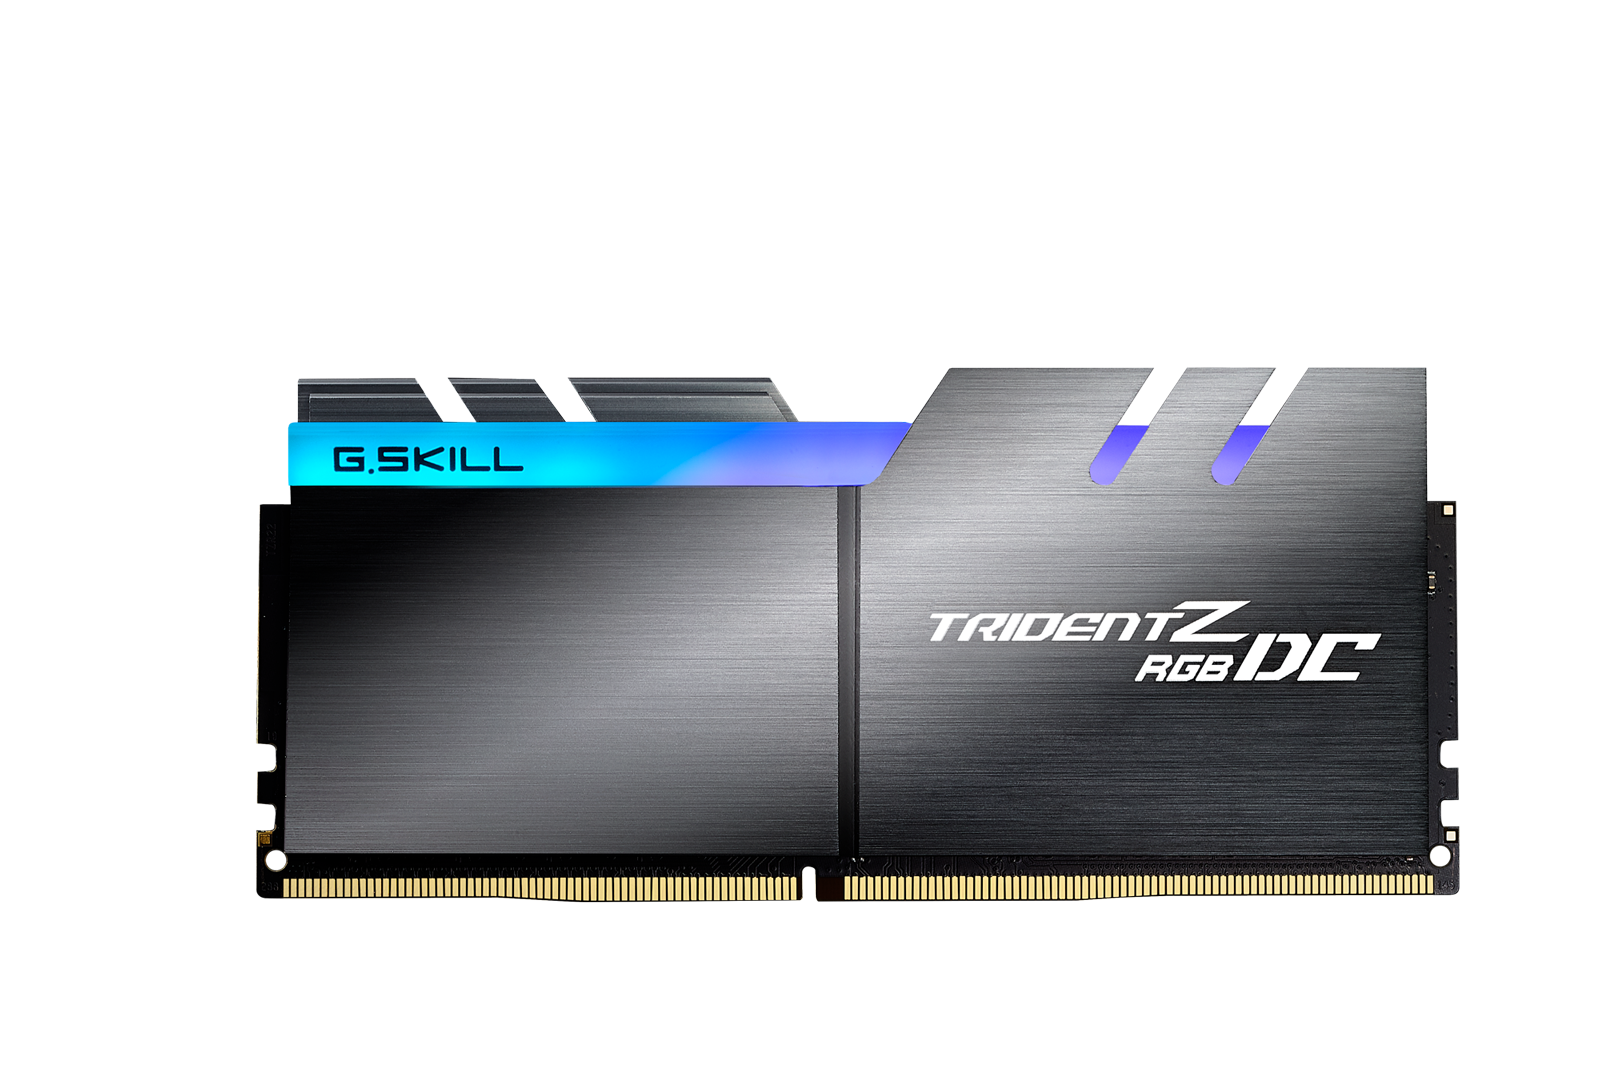 trident z rgb dc 02 G.SKILL เปิดตัวแรม Trident Z RGB DC Series DDR4 64GB (32GBx2) รุ่นใหม่ล่าสุดรองรับเมนบอร์ด Z390 เต็มรูปแบบด้วยเทคโนโลยี Double Capacity DIMM Technology ที่ใช้แรมแค่ 1คู่แต่ความจุมากถึง 64GB